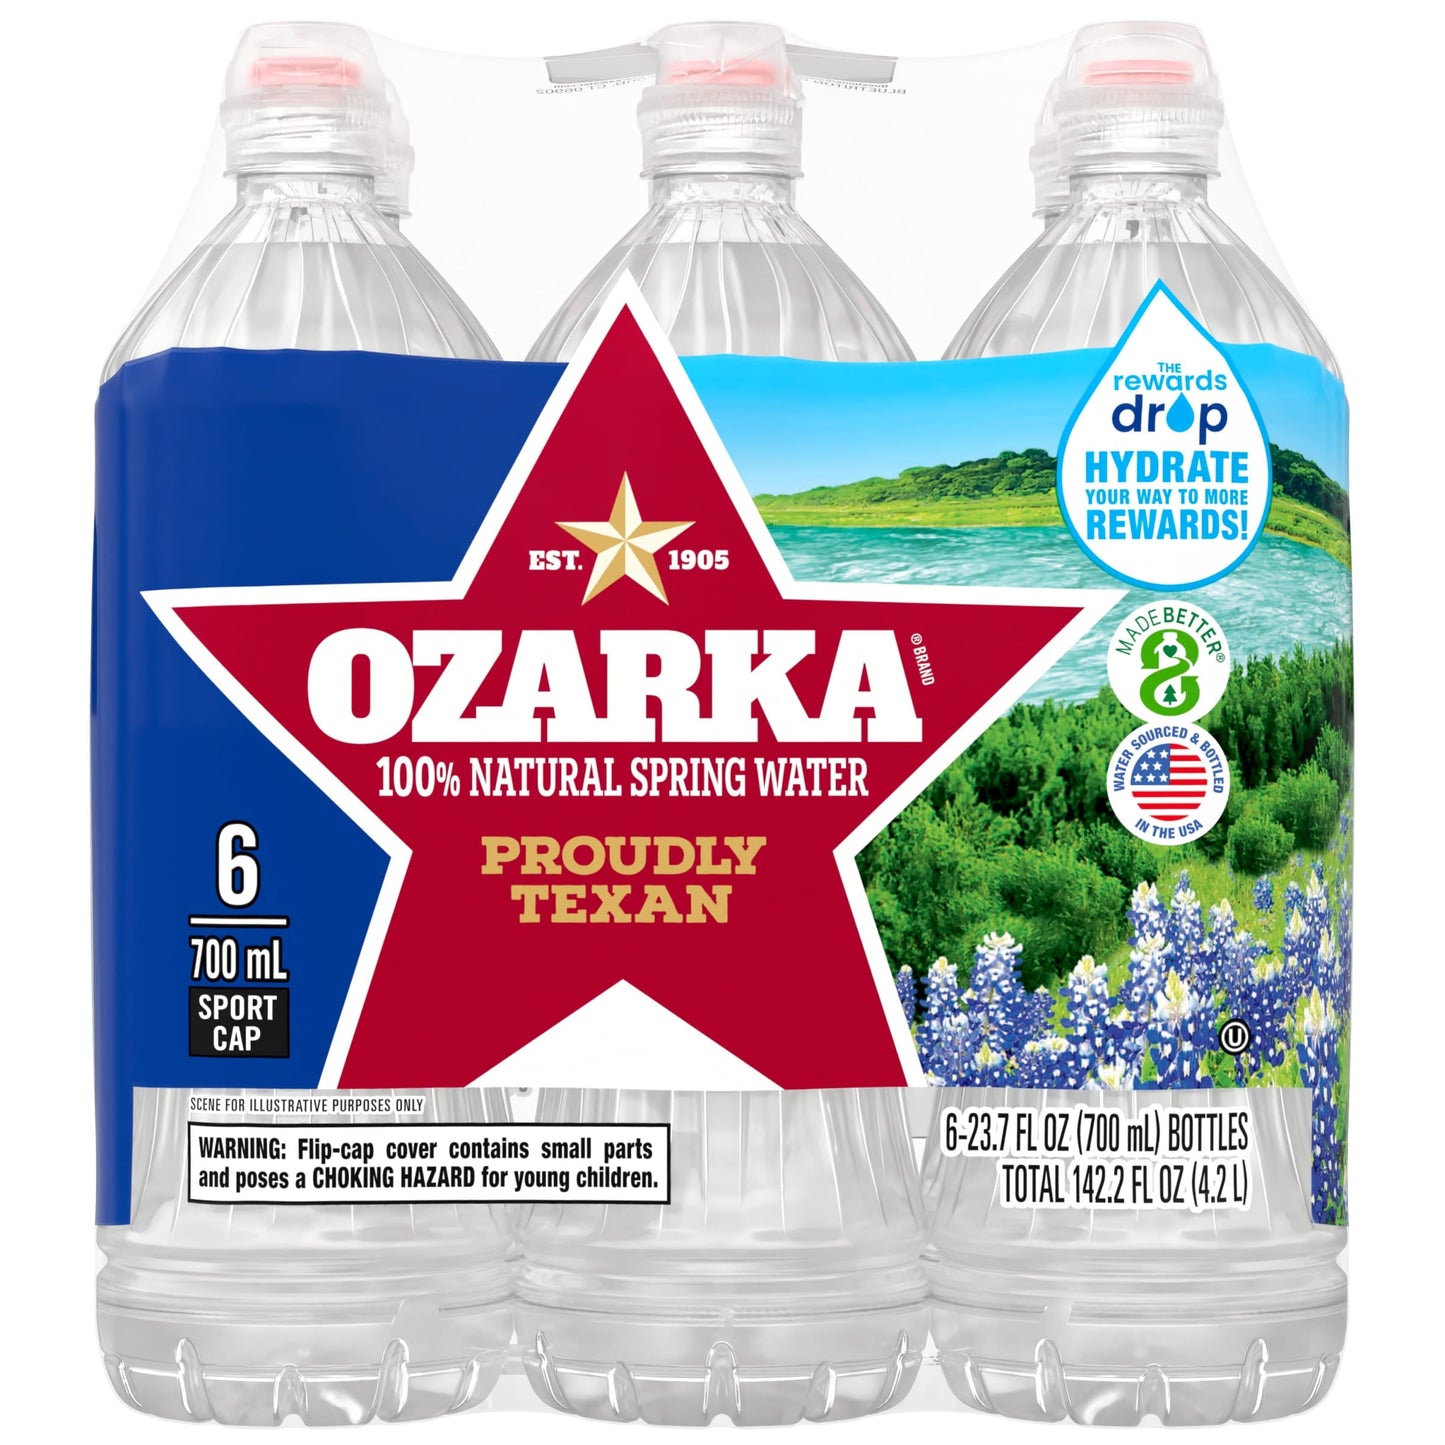 OZARKA Brand 100% Natural Spring Water, 23.7-ounce plastic sport cap bottles (Pack of 6)